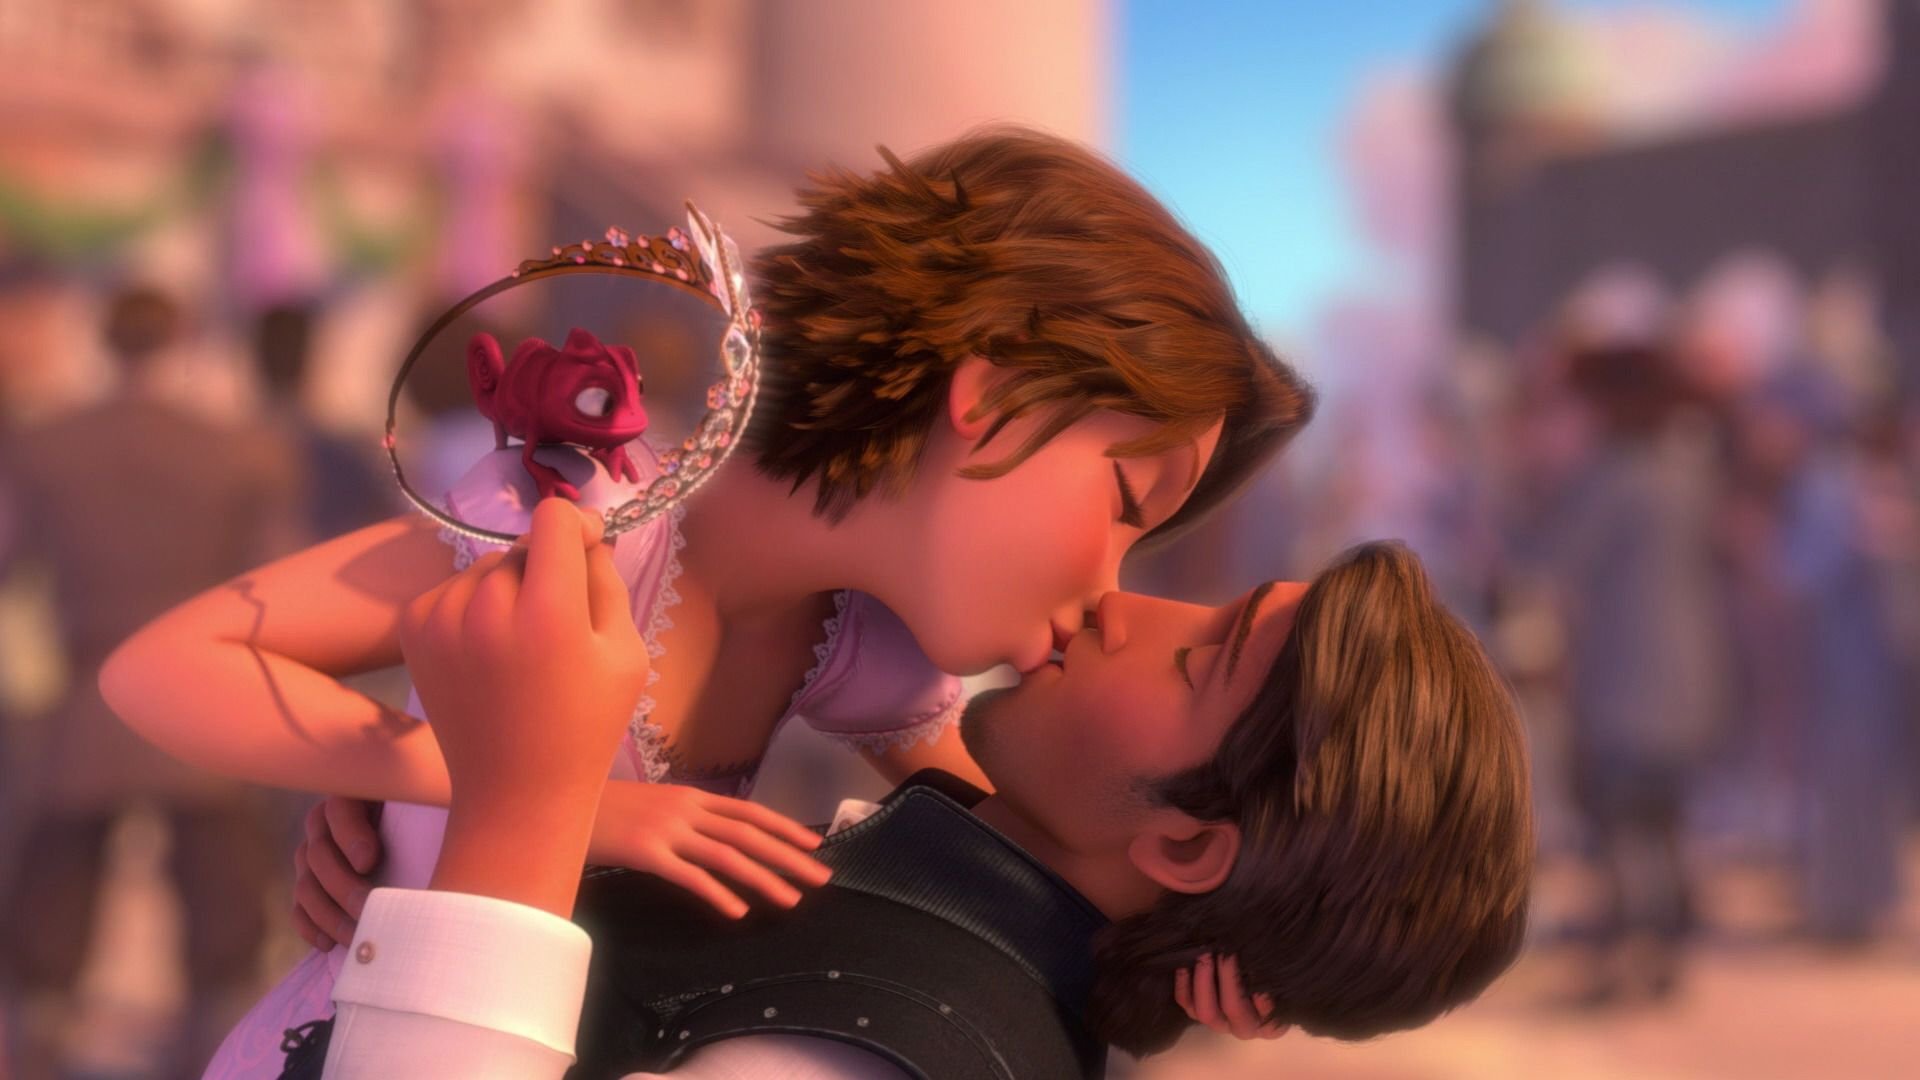 Rapunzel e Flynn Rider se beijando enquanto ele segura a coroa dela